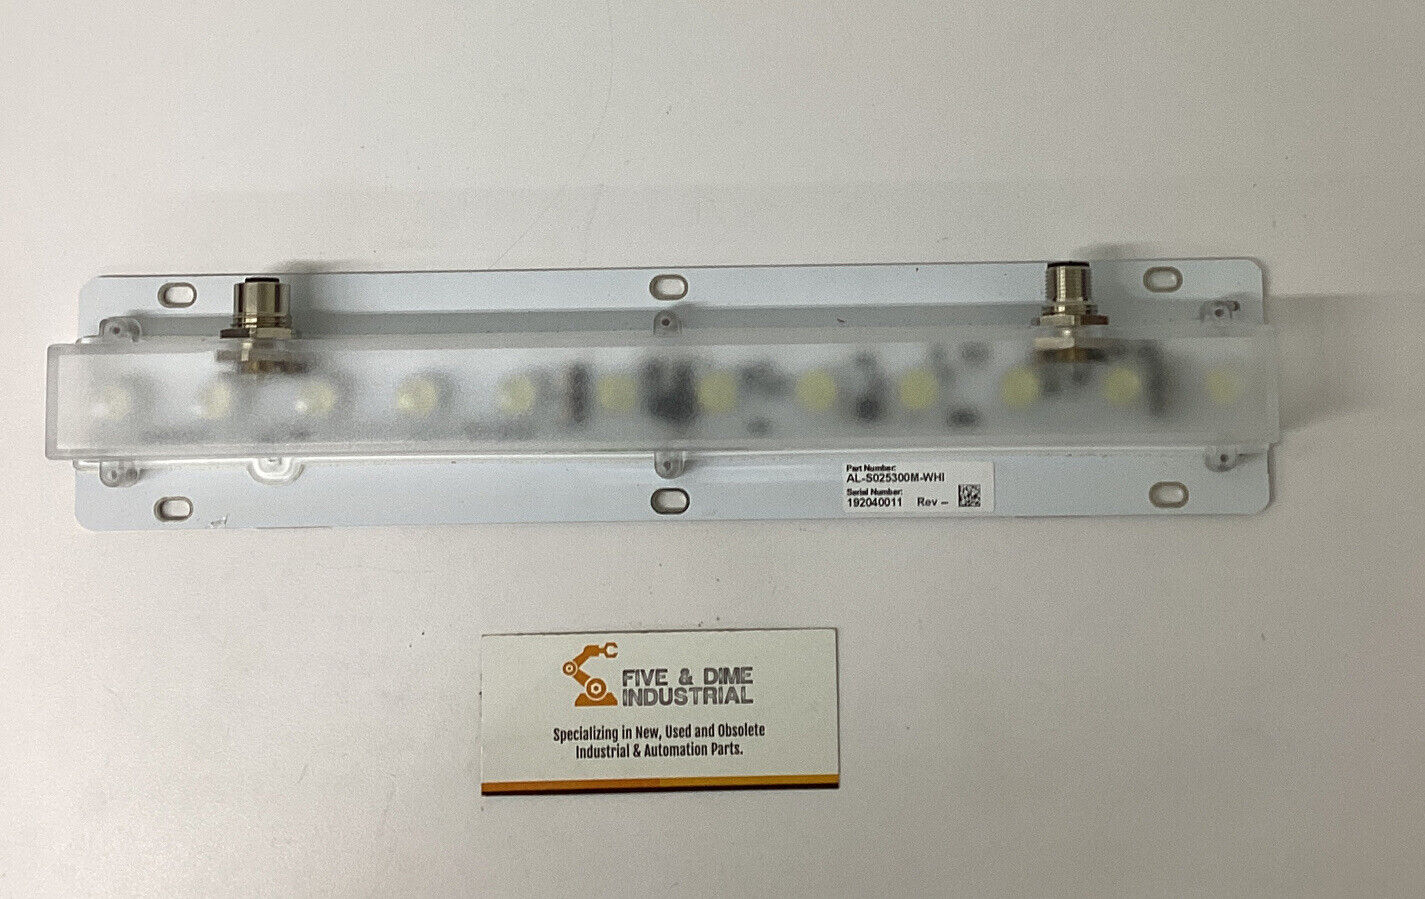 Advanced Illumination AL-S025300M-WHI  Led Light Module (YE262)